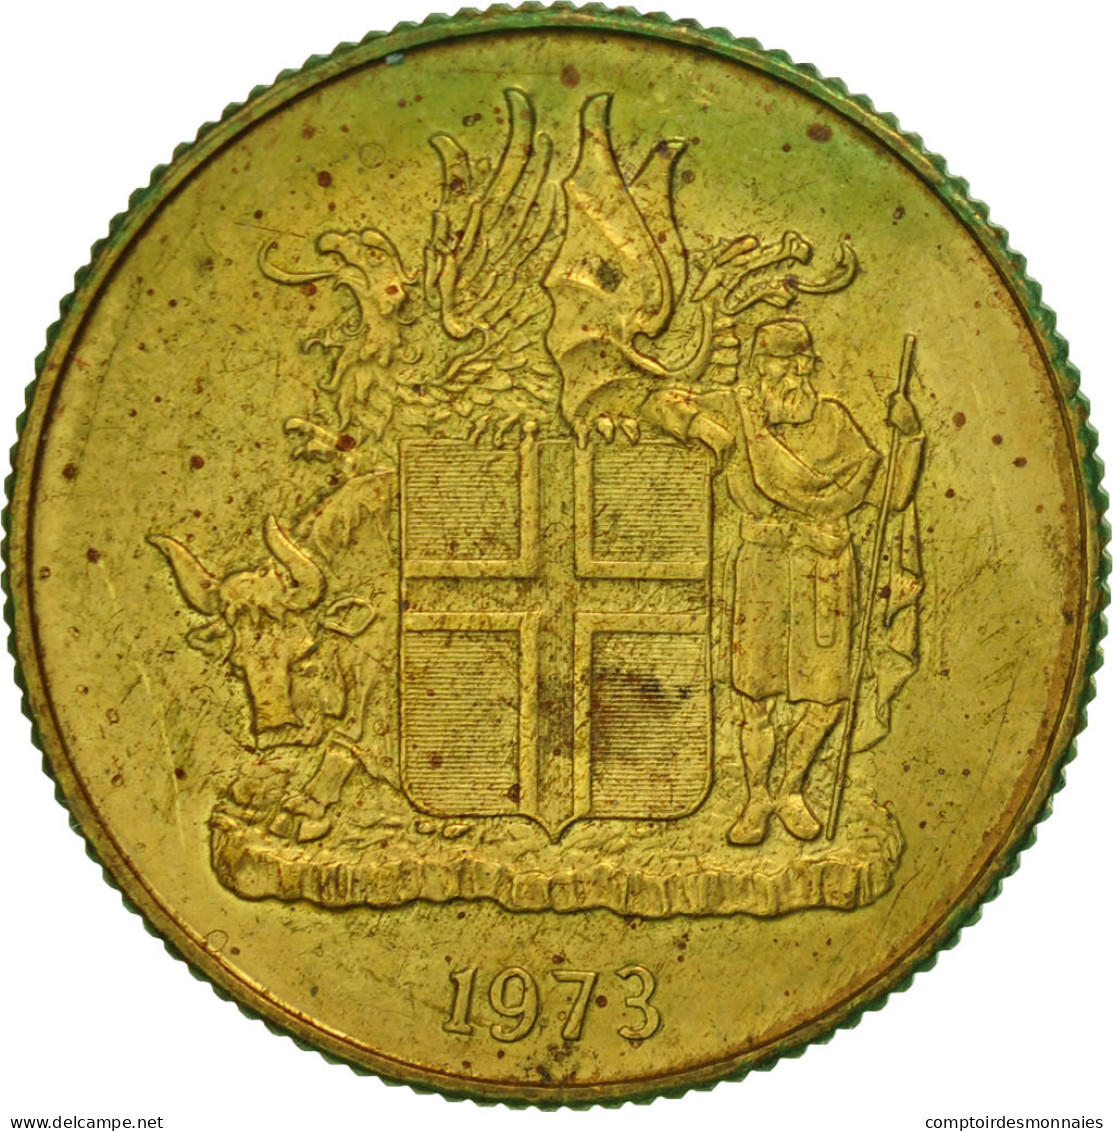 Monnaie, Iceland, Krona, 1973, TTB, Nickel-brass, KM:12a - Island